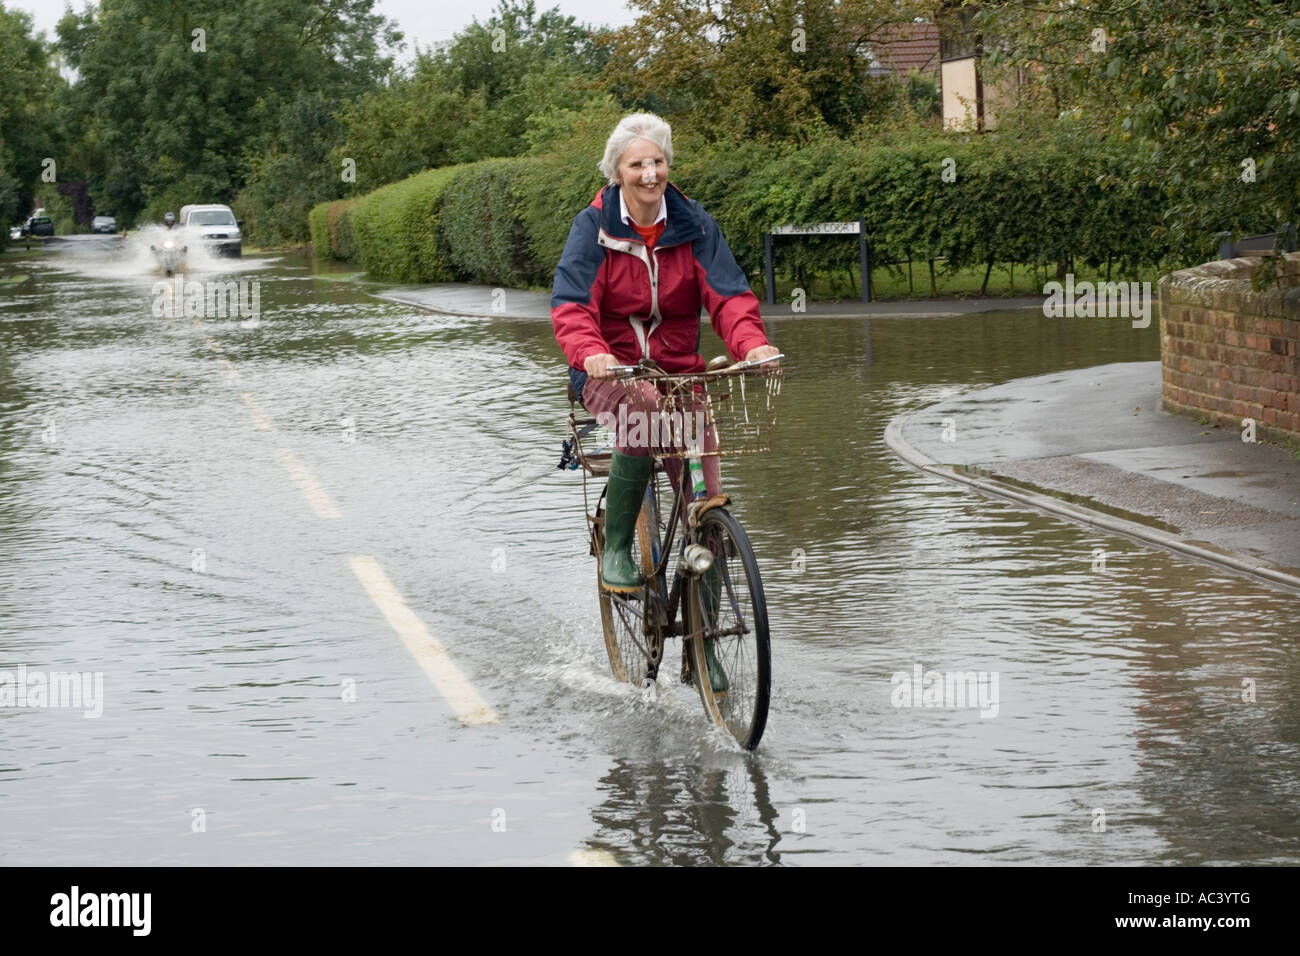 Smiling elderly woman riding bicycle riding through floods Tredington Tewkesbury UK Stock Photo